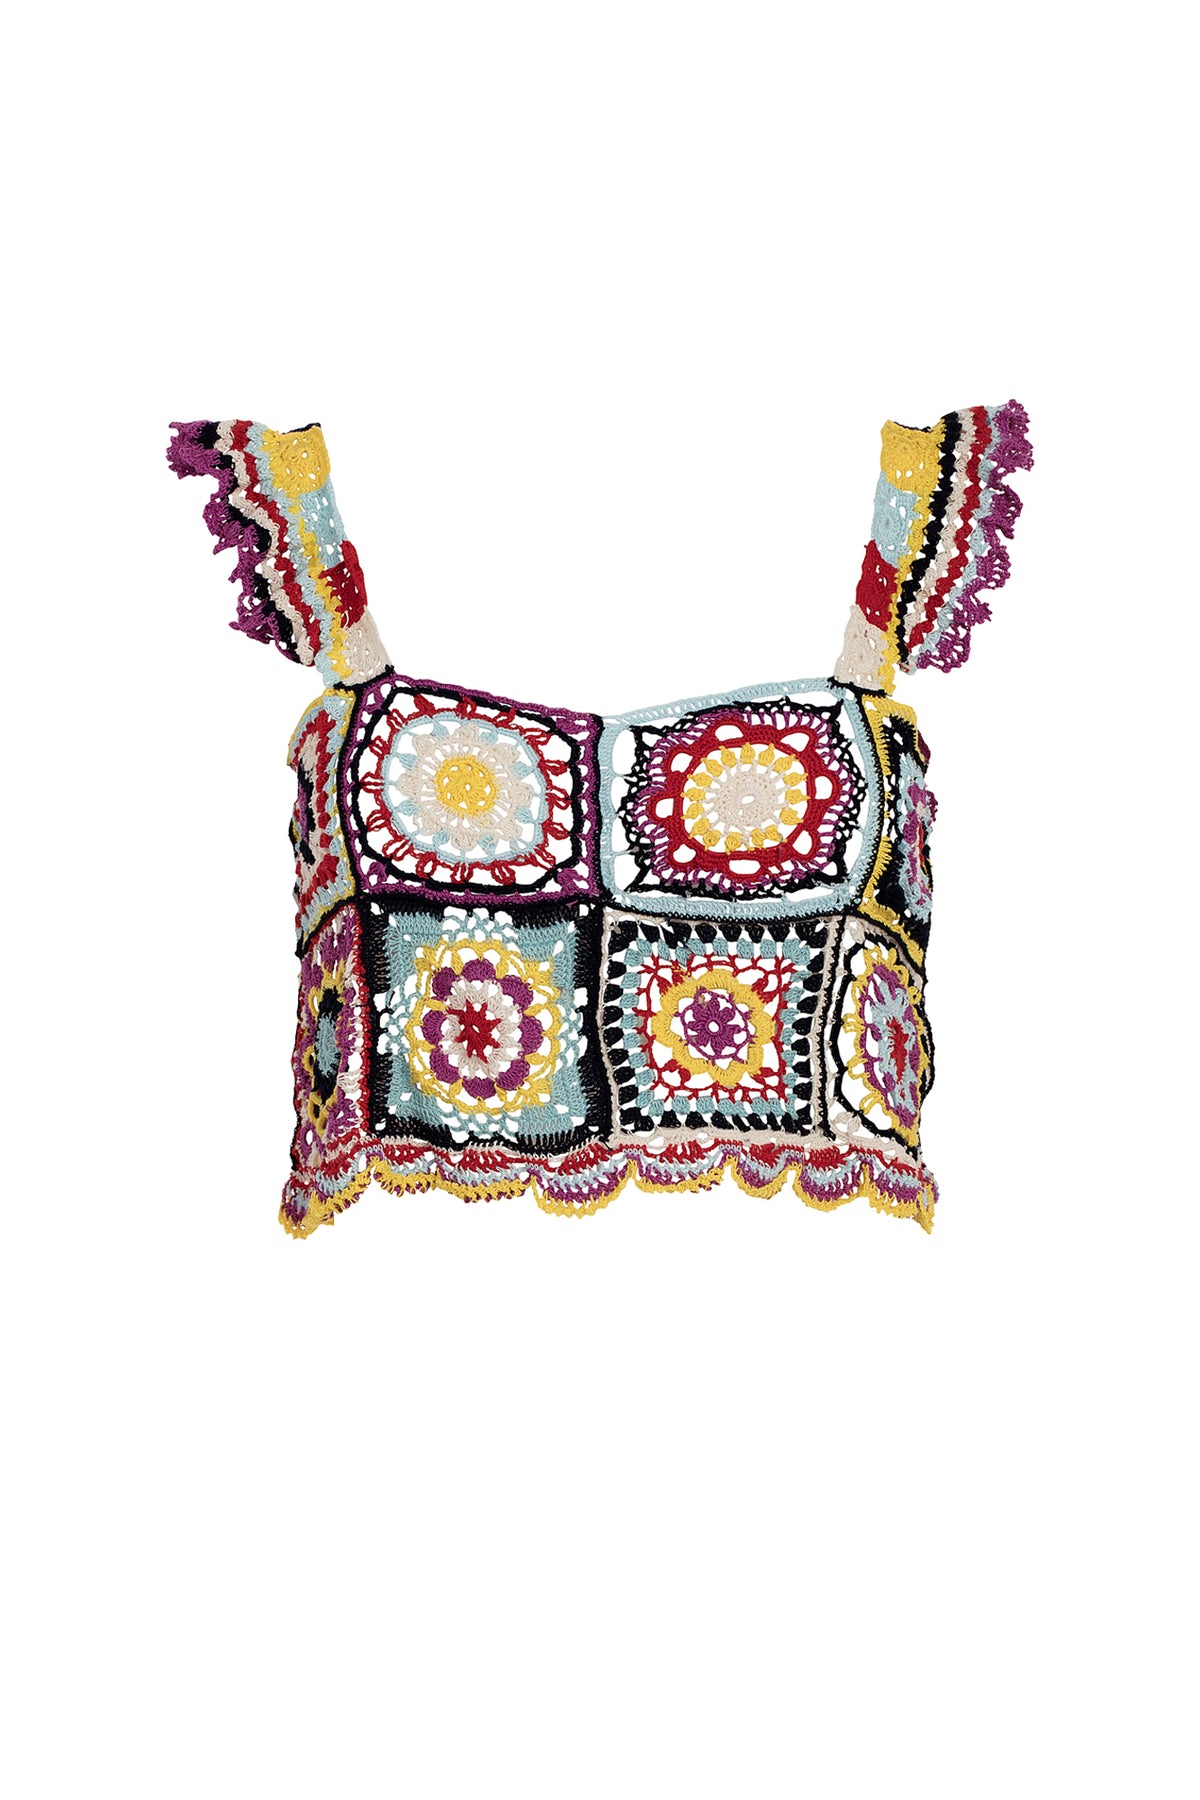 Carolina K Tile Crochet Top in Terracotta Tile